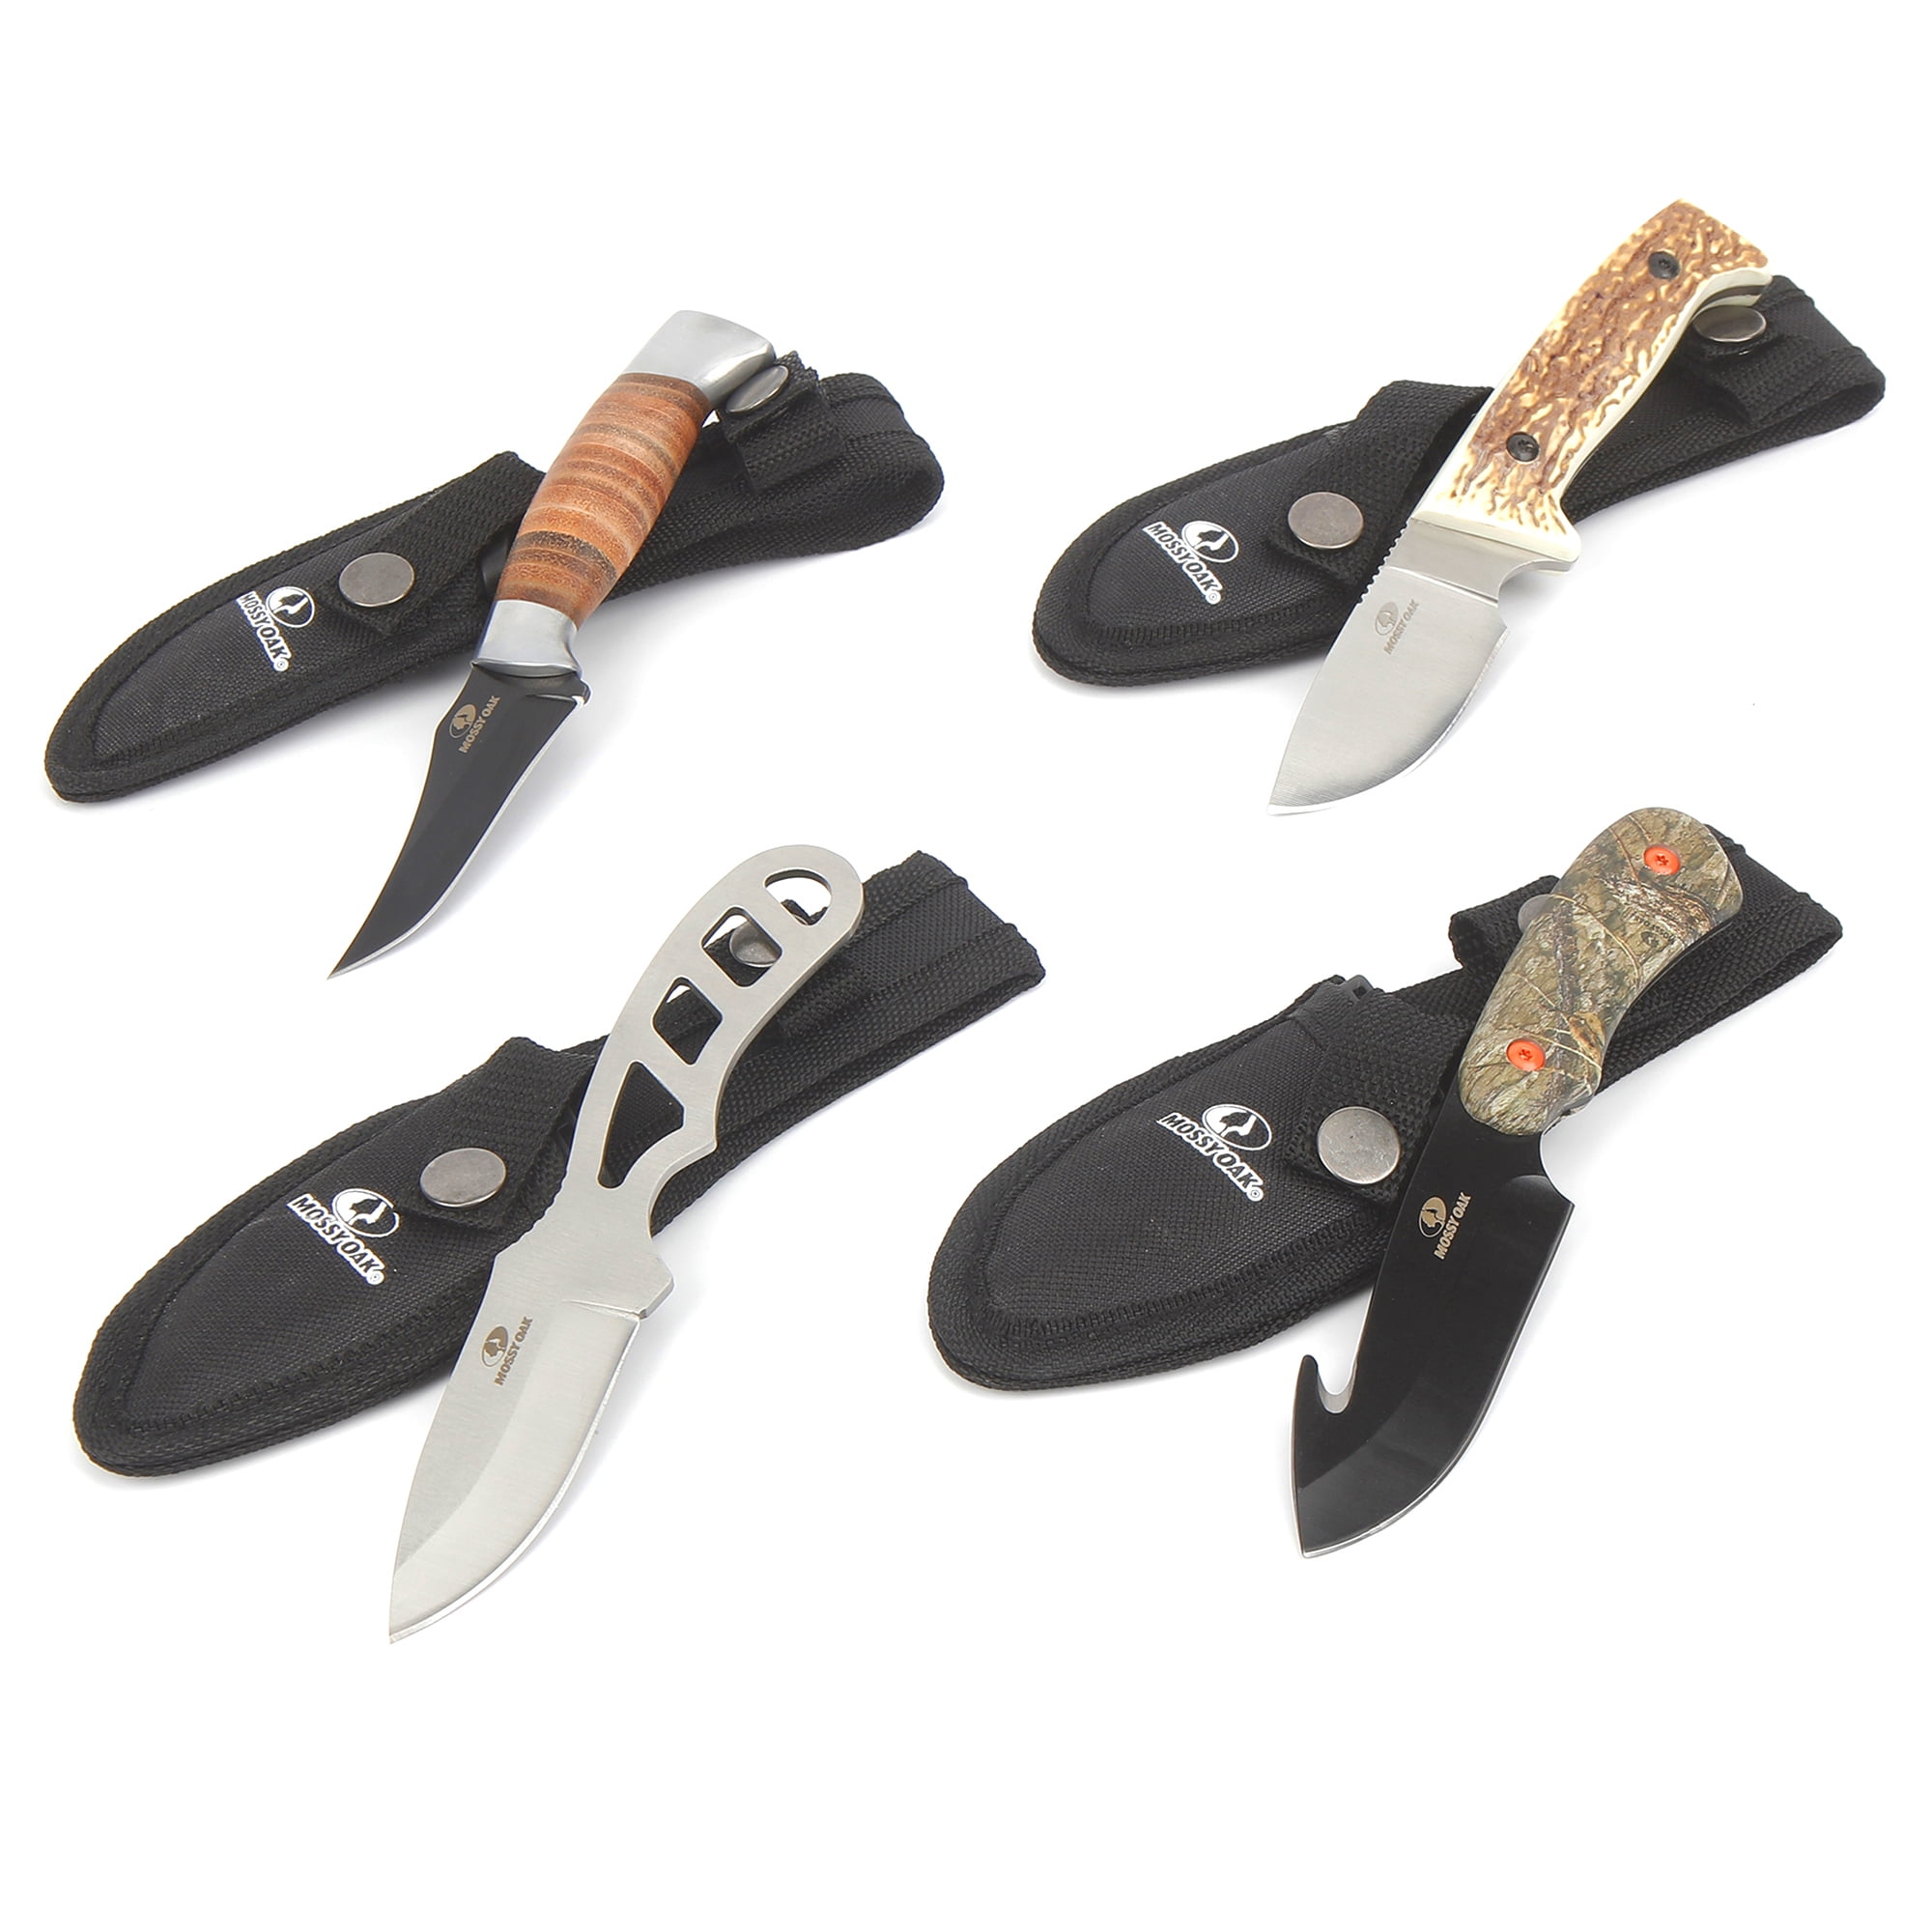 Set of 4 Mossy Oak 7" Single-Edge Tactical Knives $11 + Free S&H w/ Walmart+ or $35+